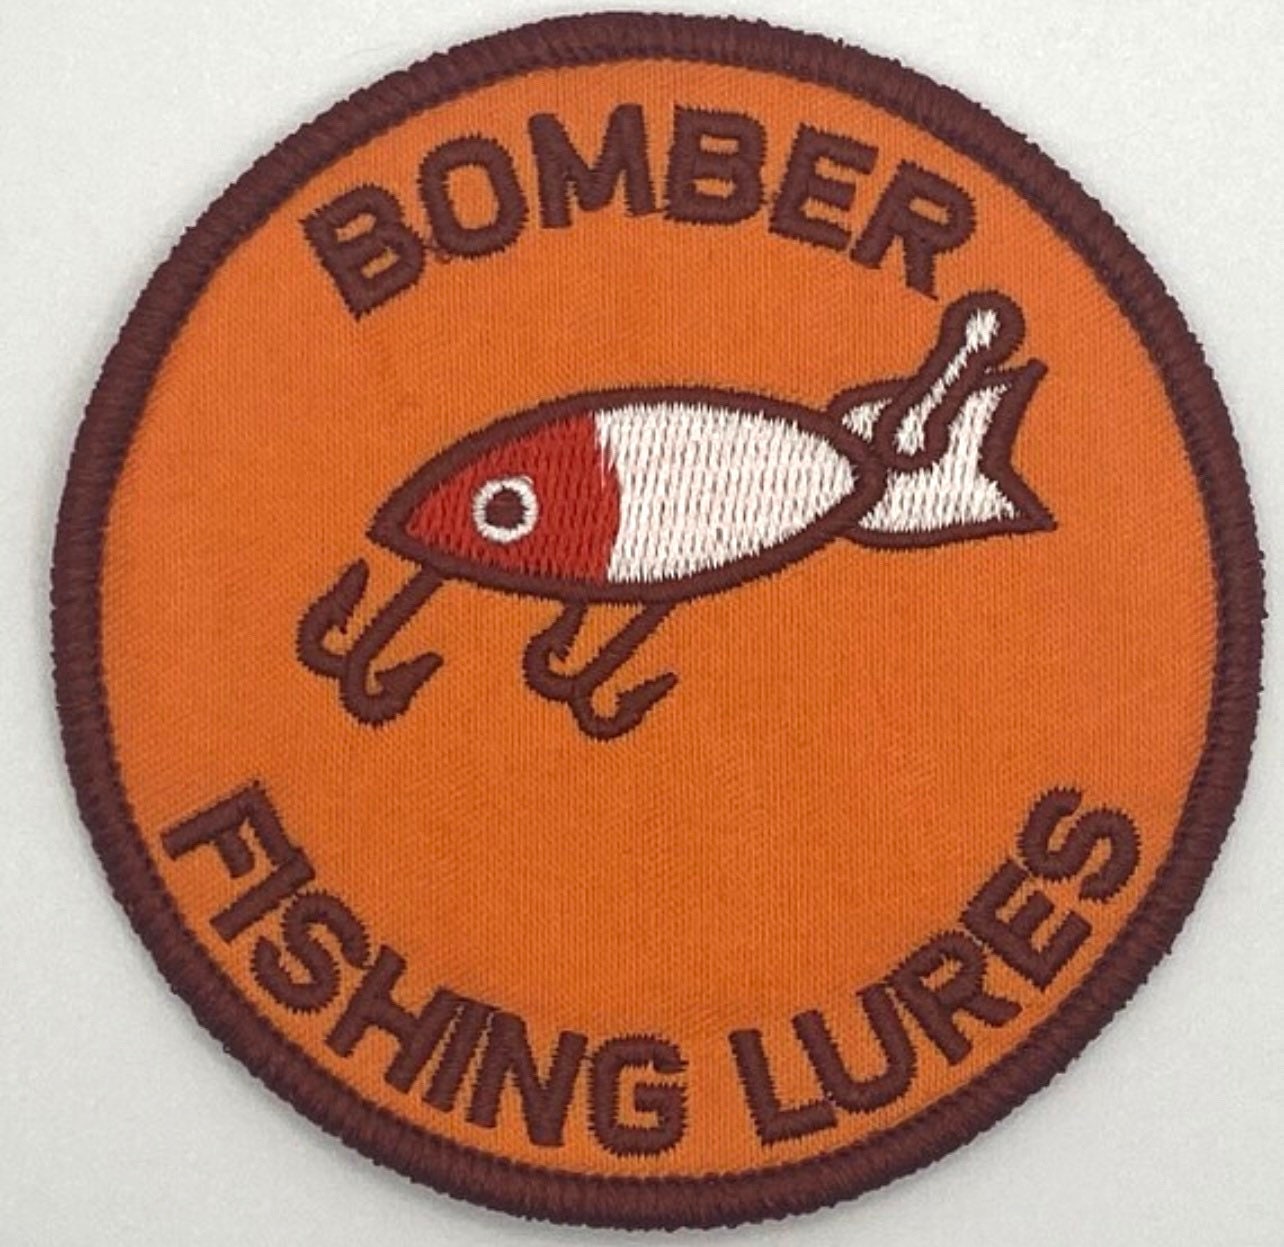 Buy Bomber Fishing Lures Orange Patch Vintage Style Retro Sew Iron